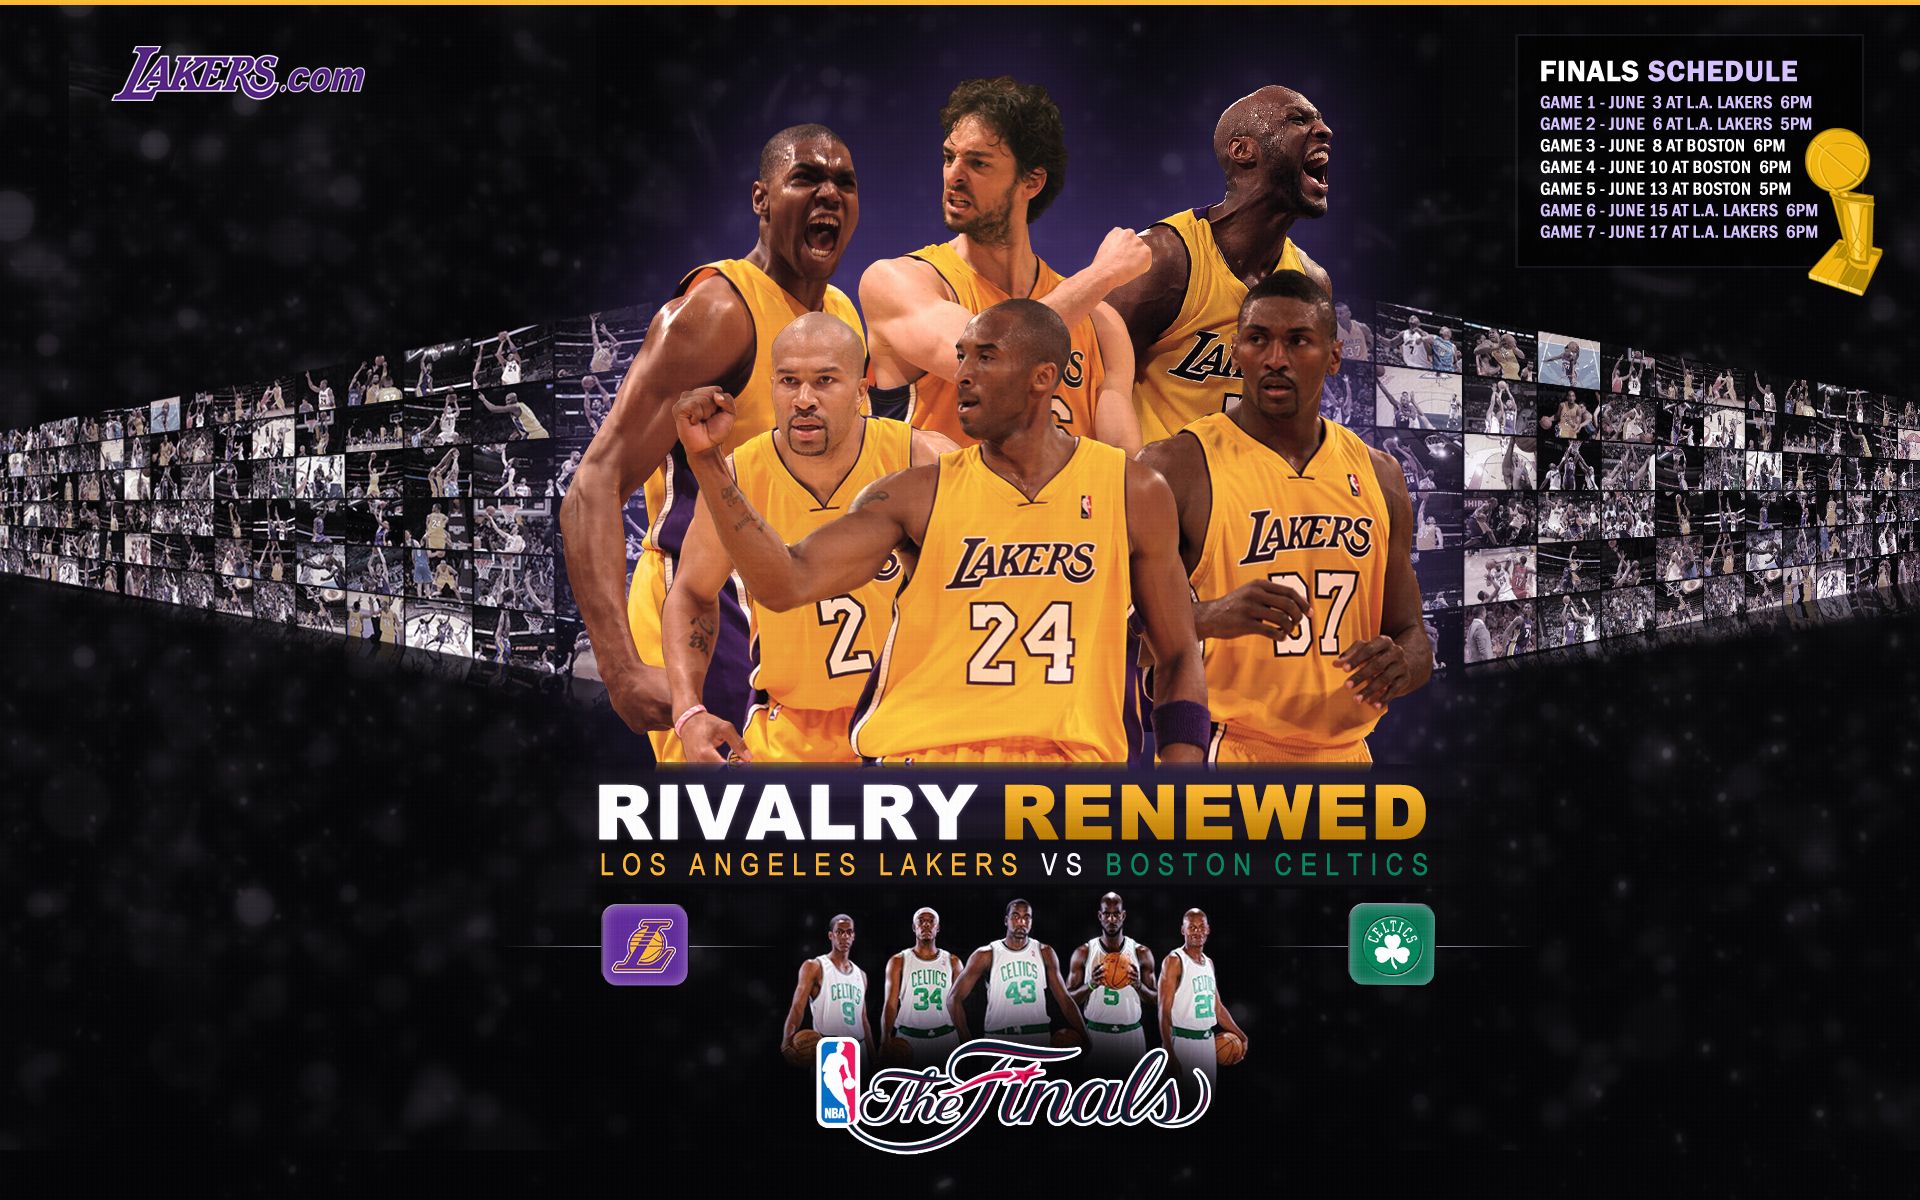 The finals скины. Лейкерс 2010. Финал НБА 2010. Lakers обои. Вся команда Lakers.